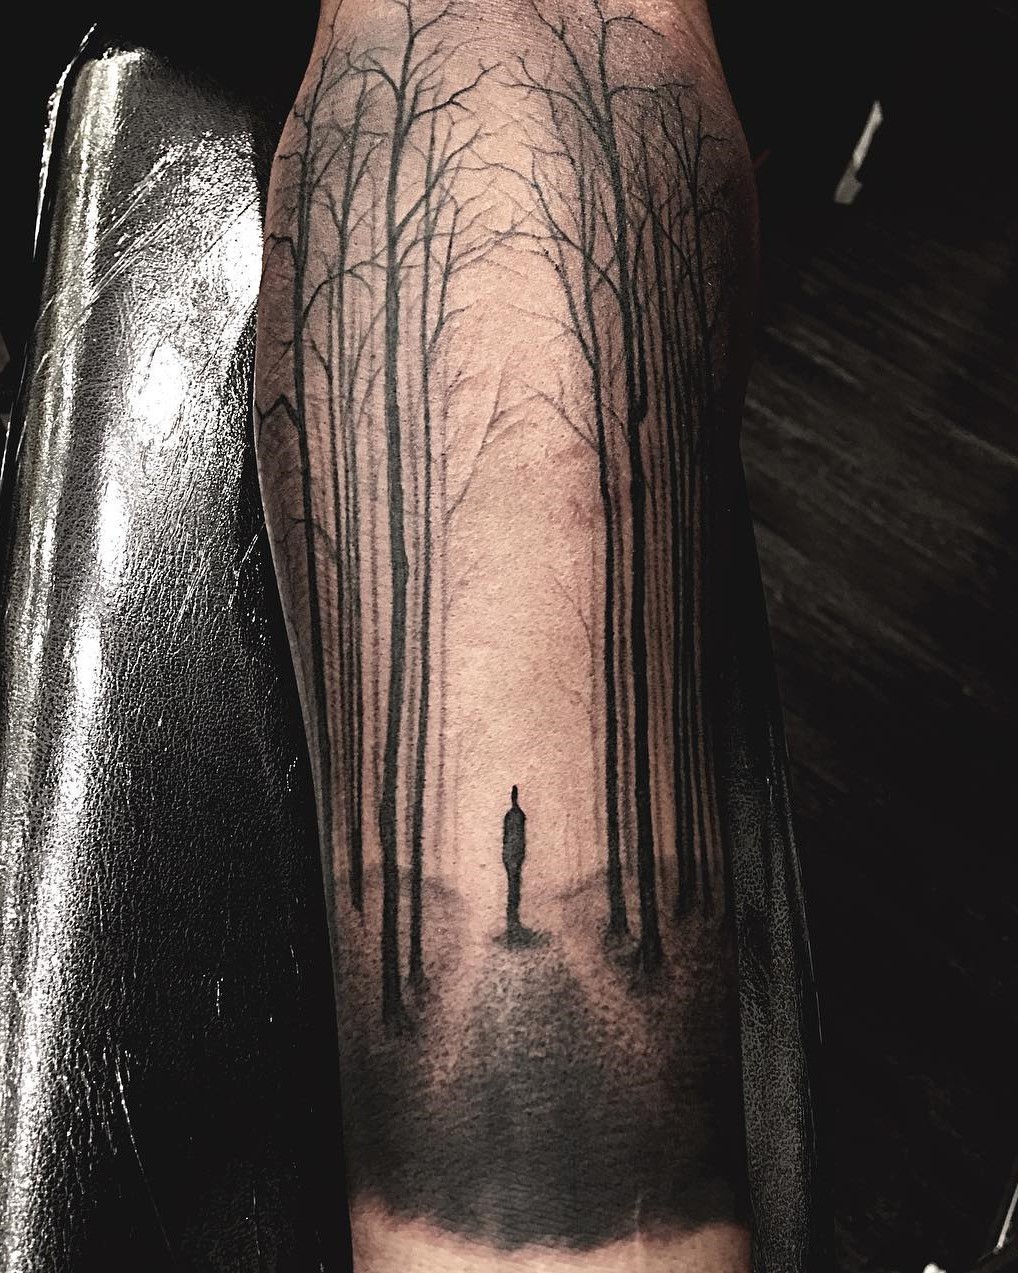 Tattoo uploaded by 𝐒𝐇𝐀𝐃𝐎𝐖 𝐓𝐀𝐓𝐓𝐎𝐎   Cover up tattoos by tattoo  artist Pascal salloum Instagramshadowtatt2 FacebookPascal salloum   Tattoodo